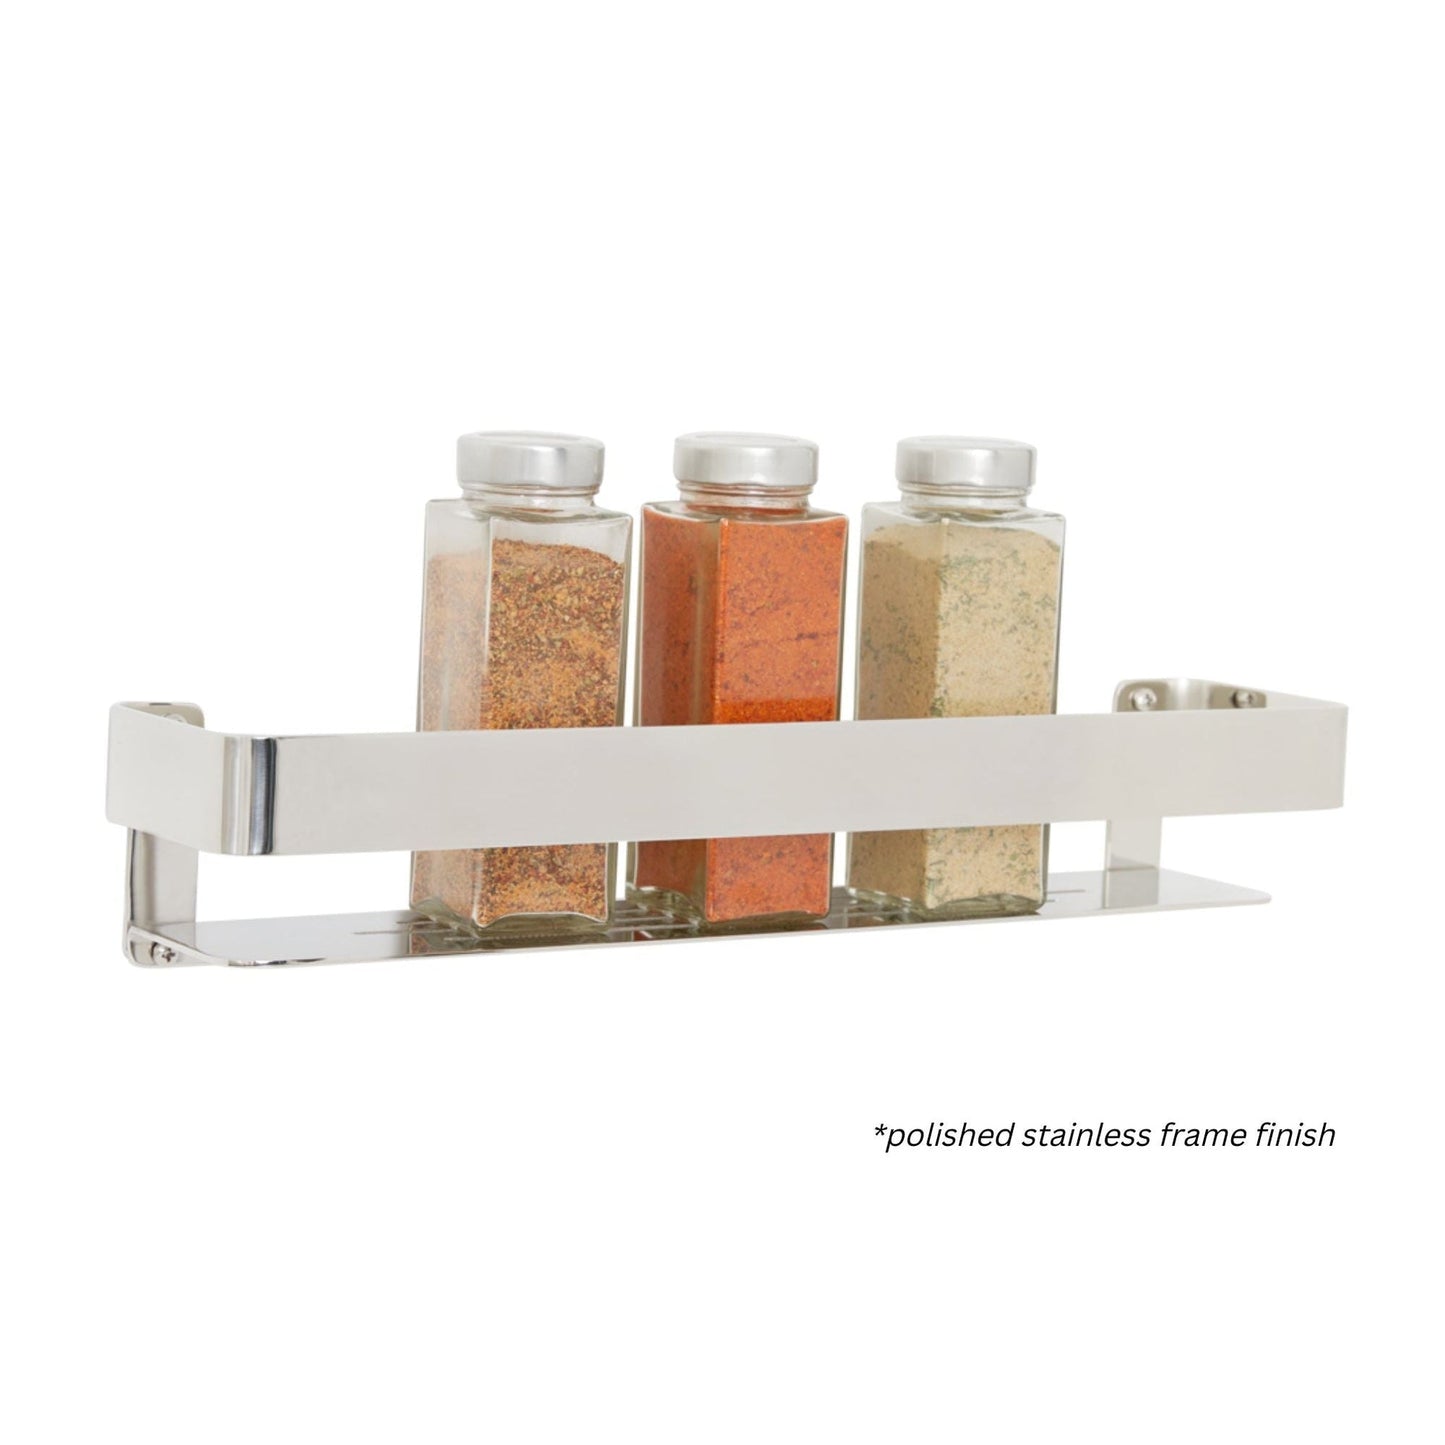 Seachrome Coronado 700 Series 18" x 4" Rectangular Shower Shelf With Rail in Almond Powder Coated Stainless Steel Finish